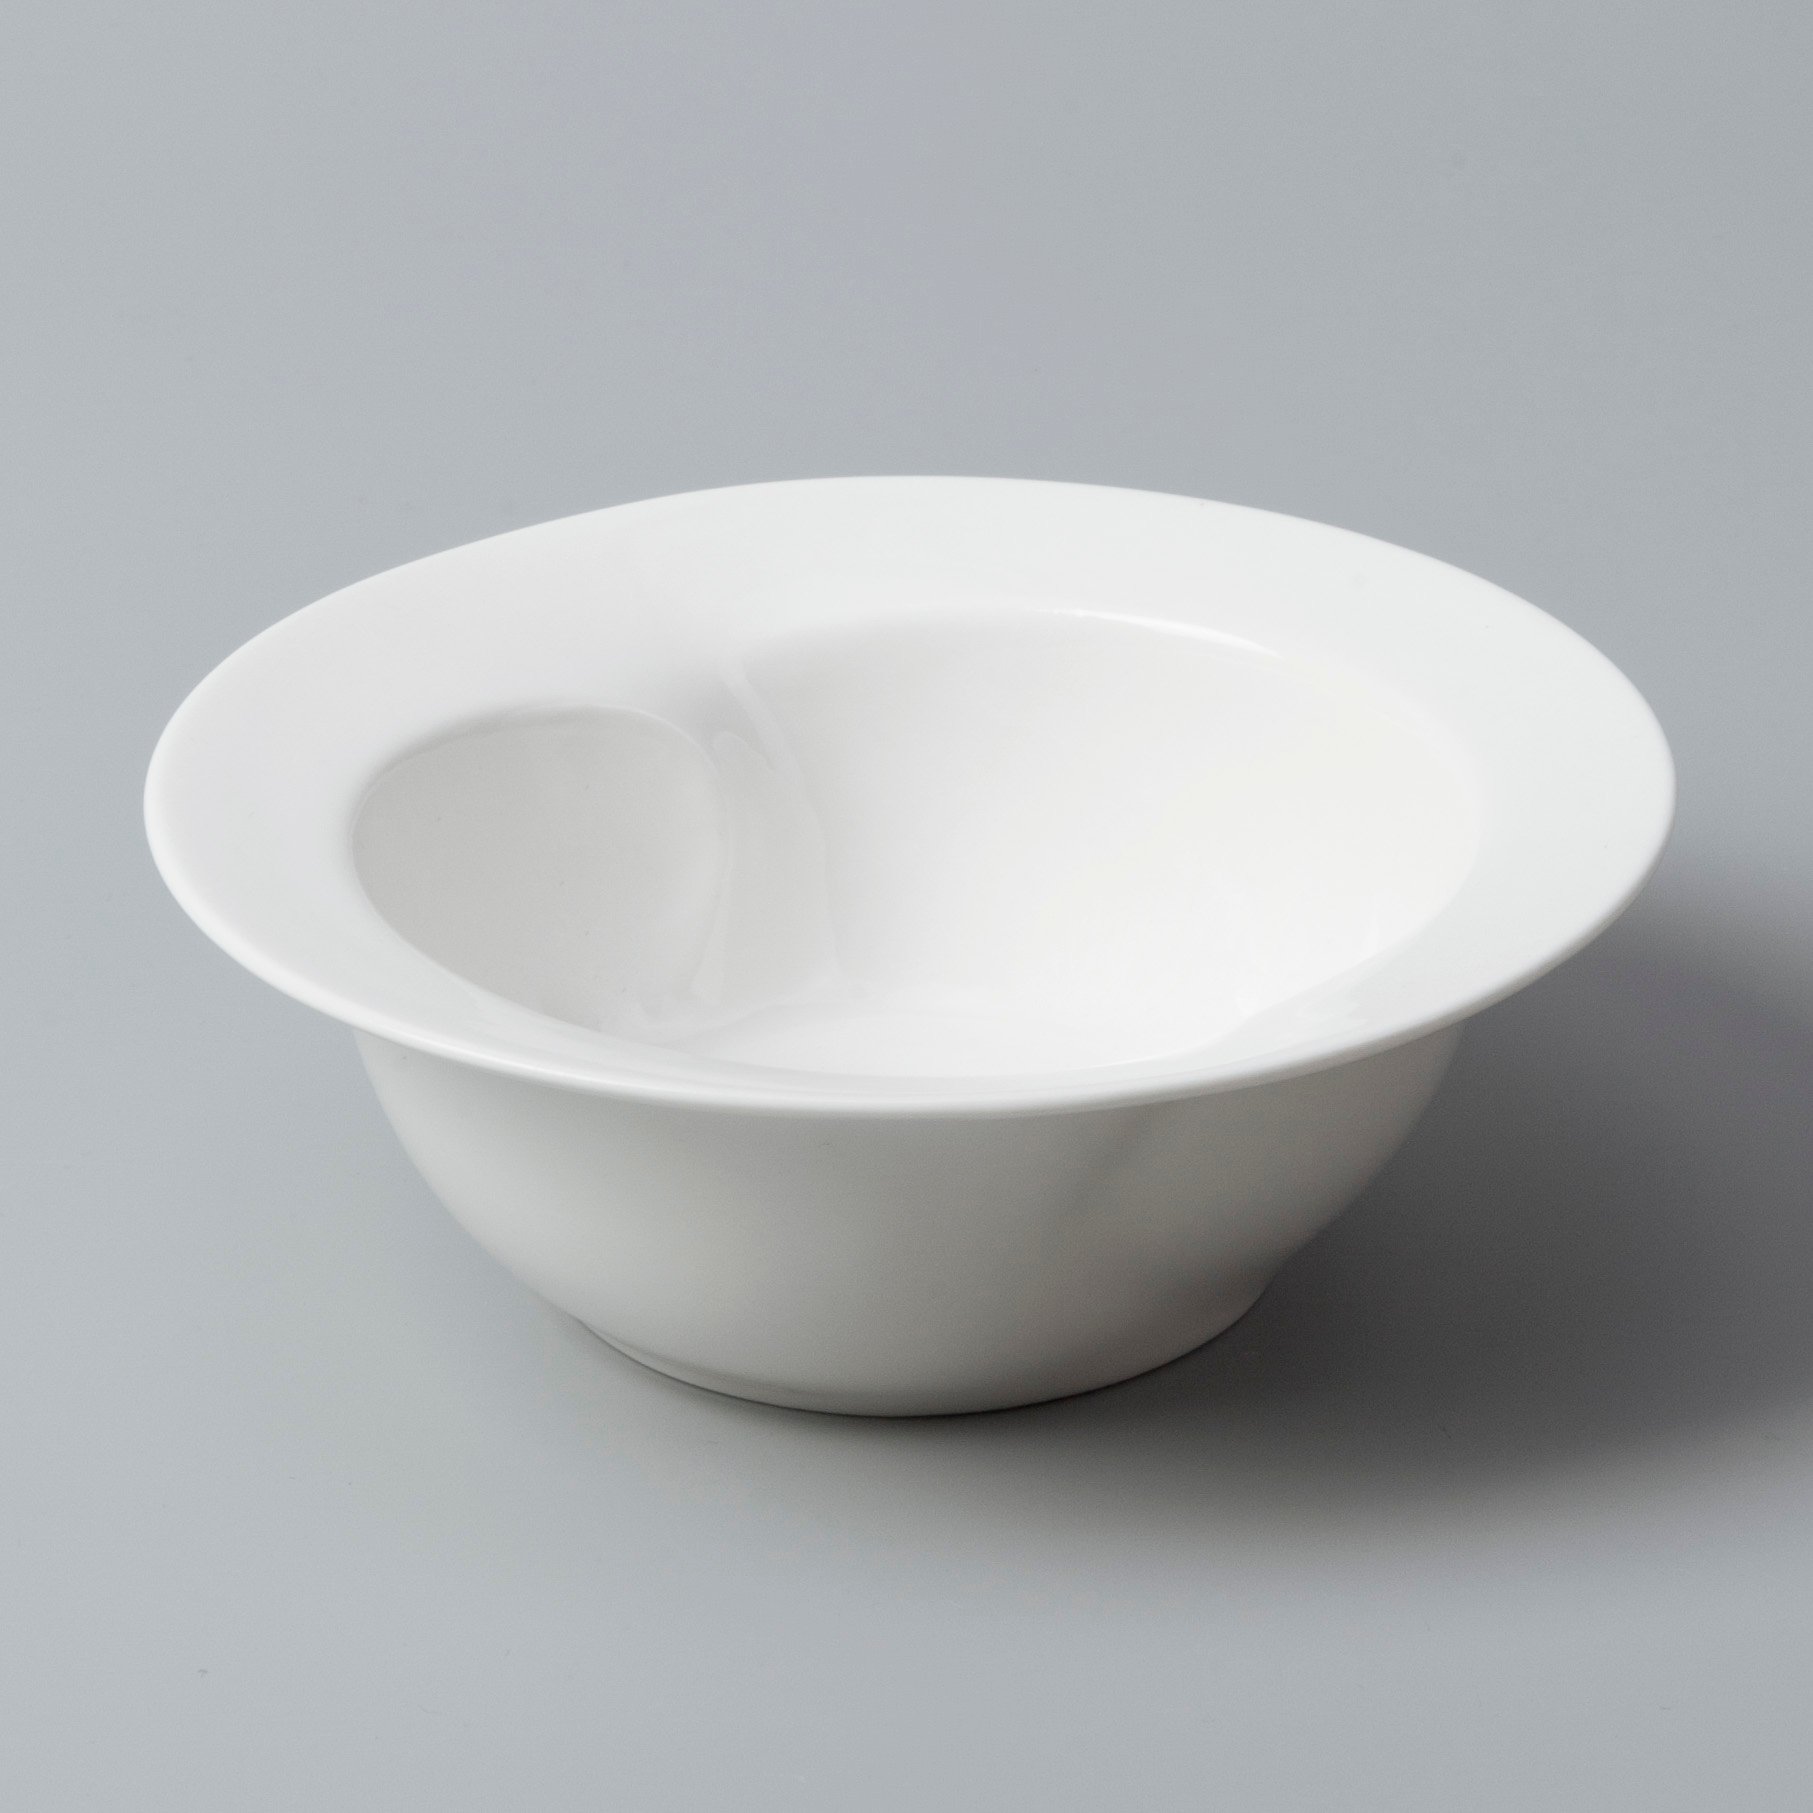 glaze best porcelain dinnerware in the world Italian style manufacturerfor home-5